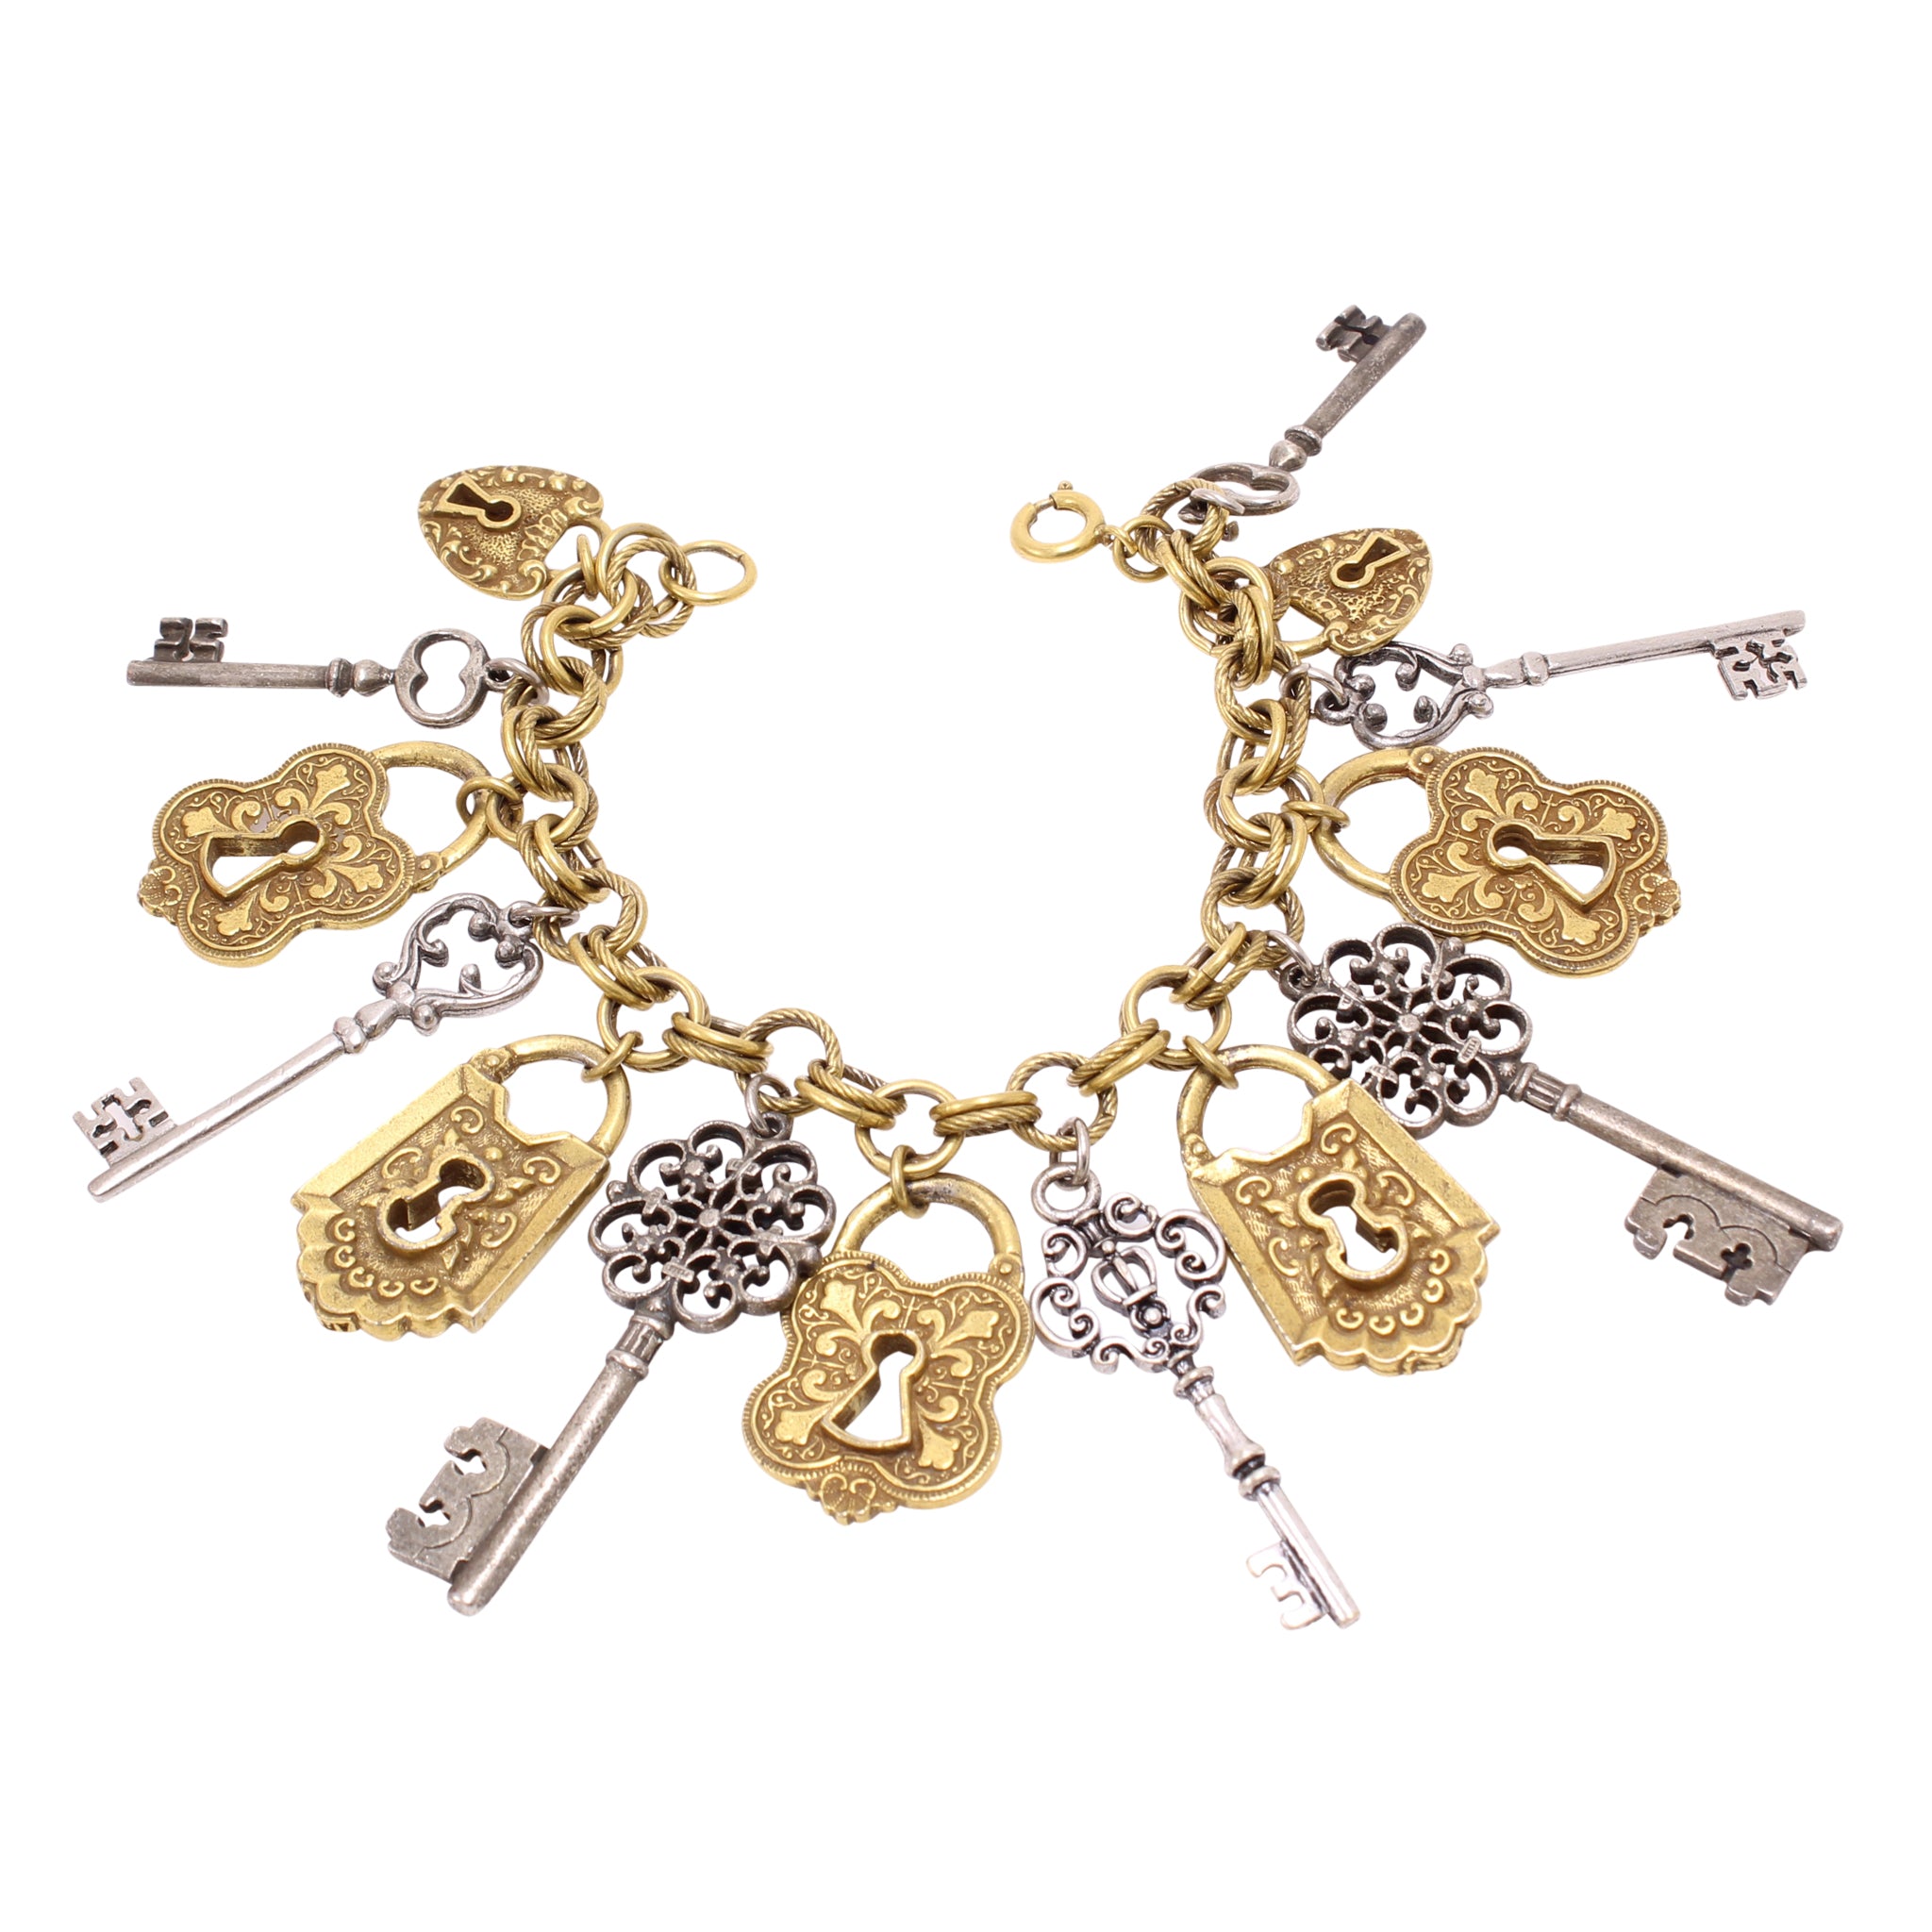 lock charm bracelet